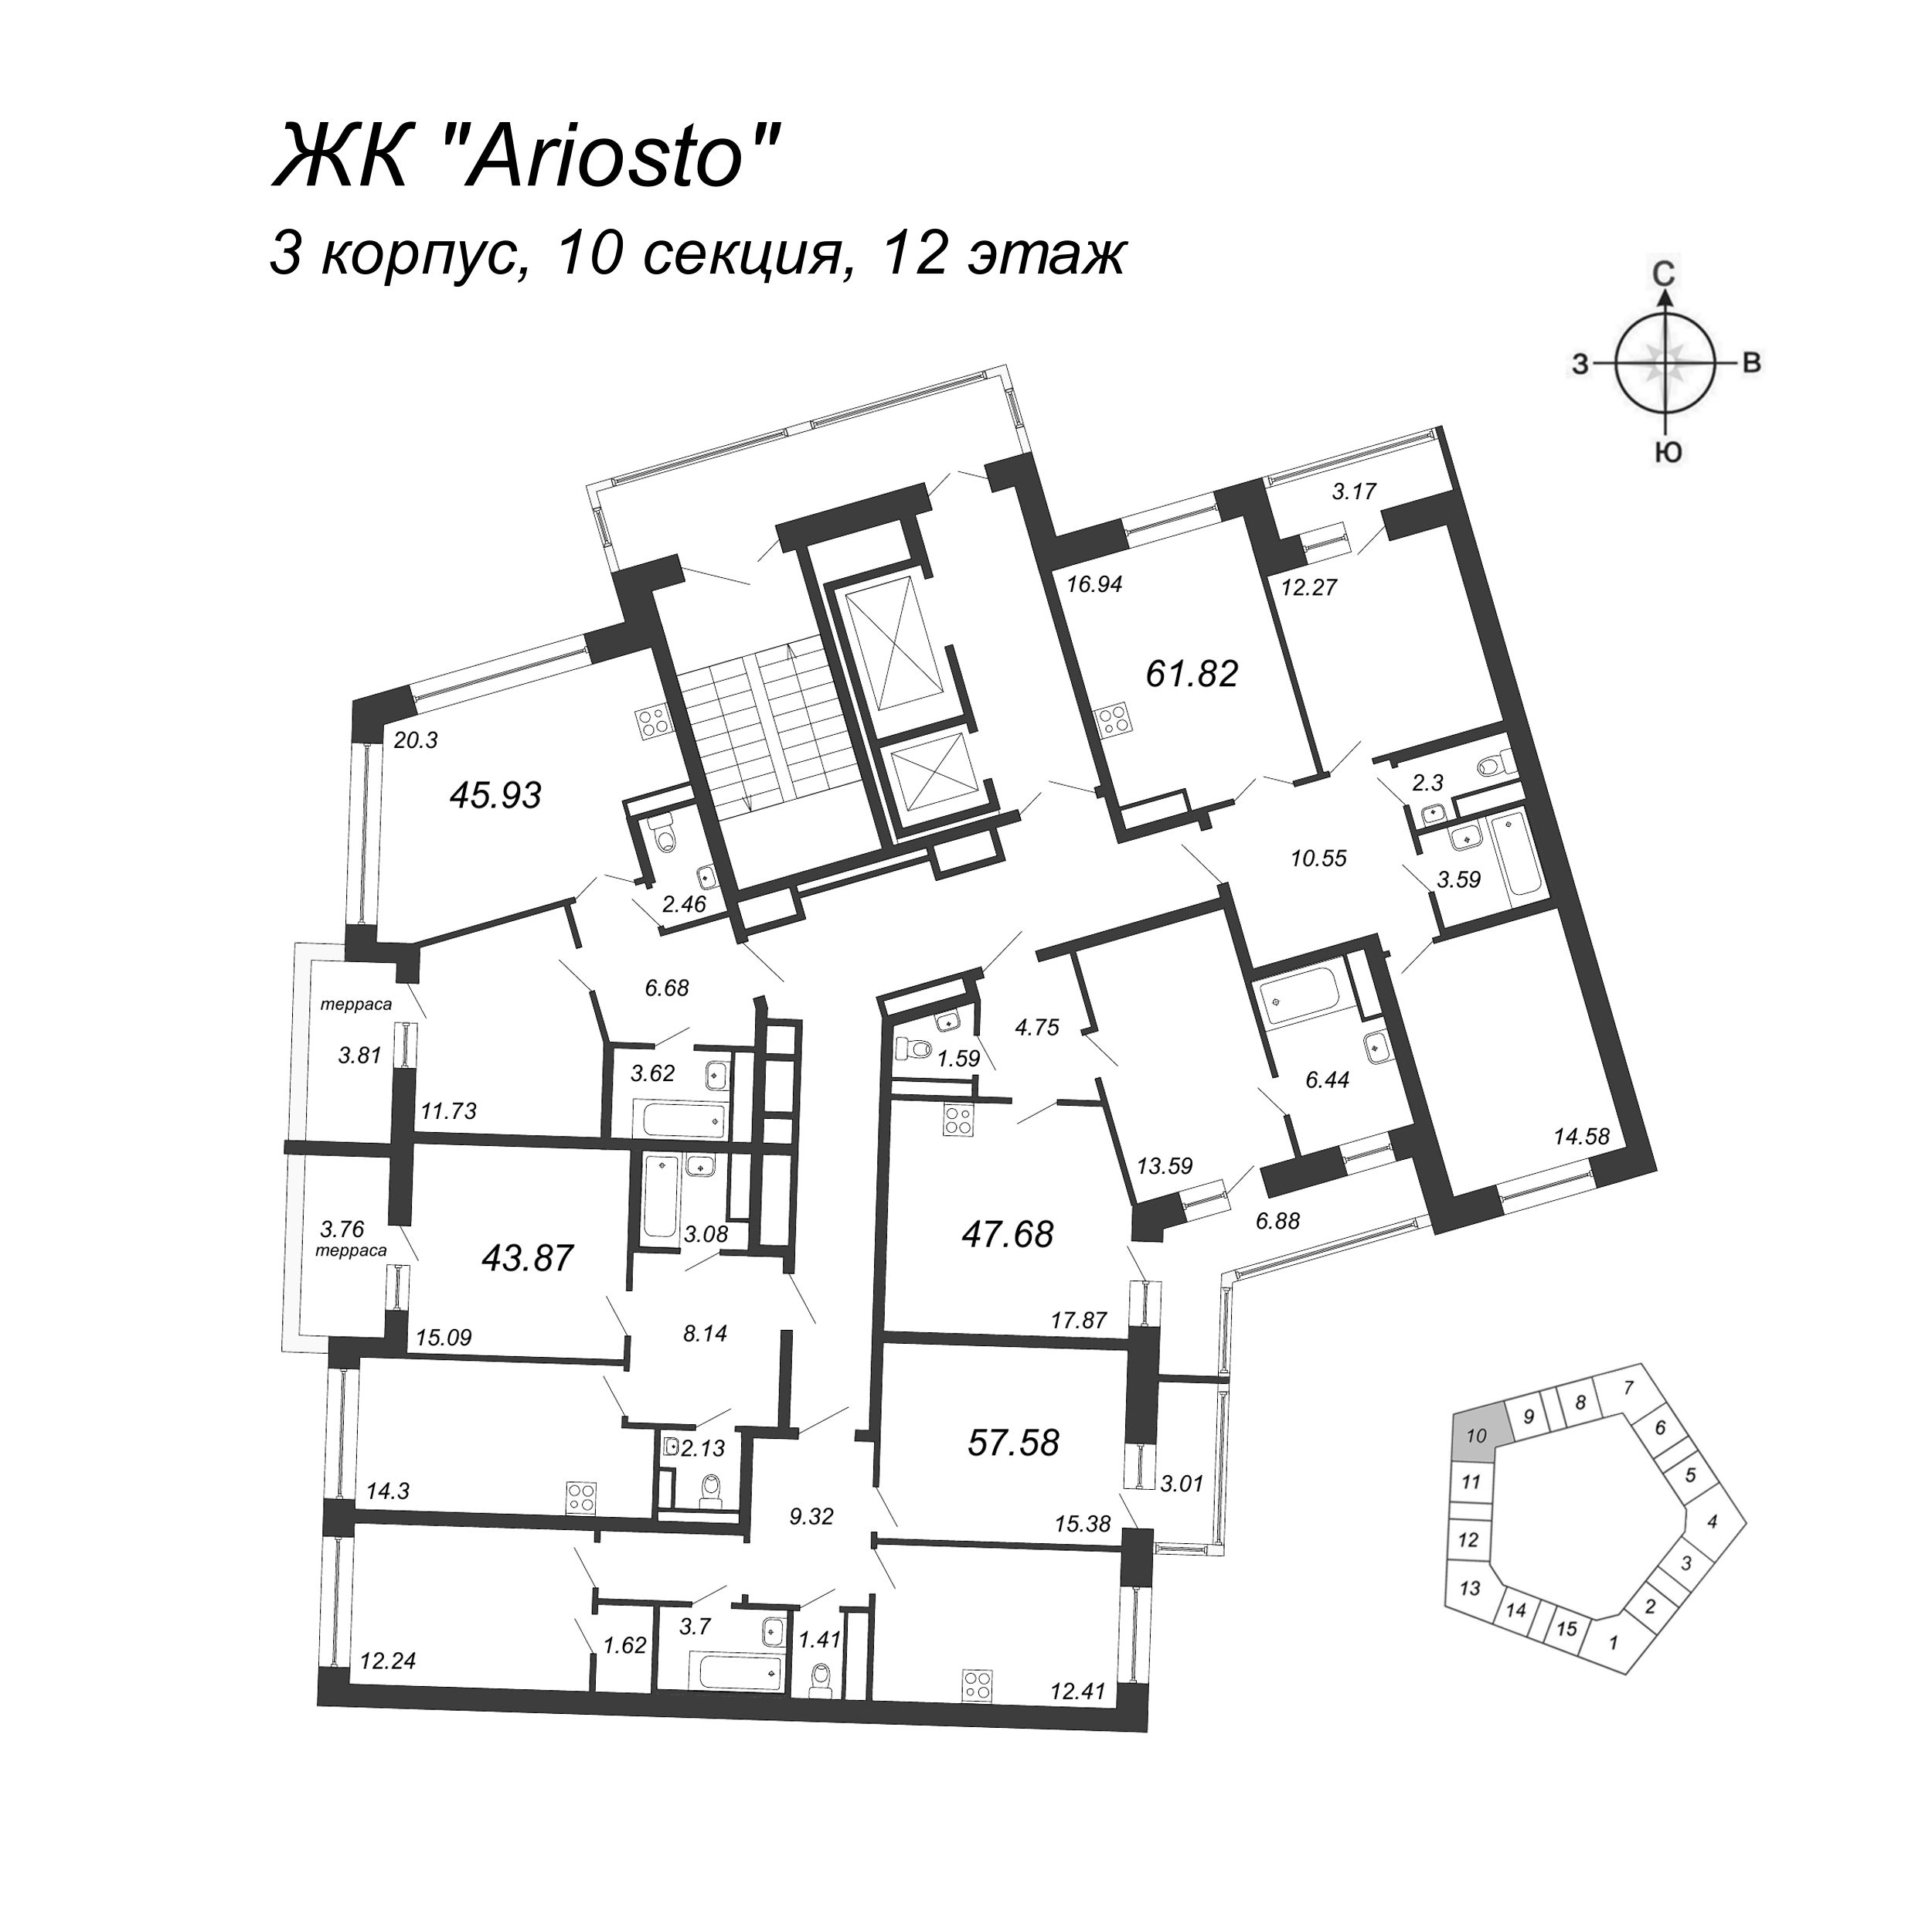 2-комнатная (Евро) квартира, 47.68 м² - планировка этажа